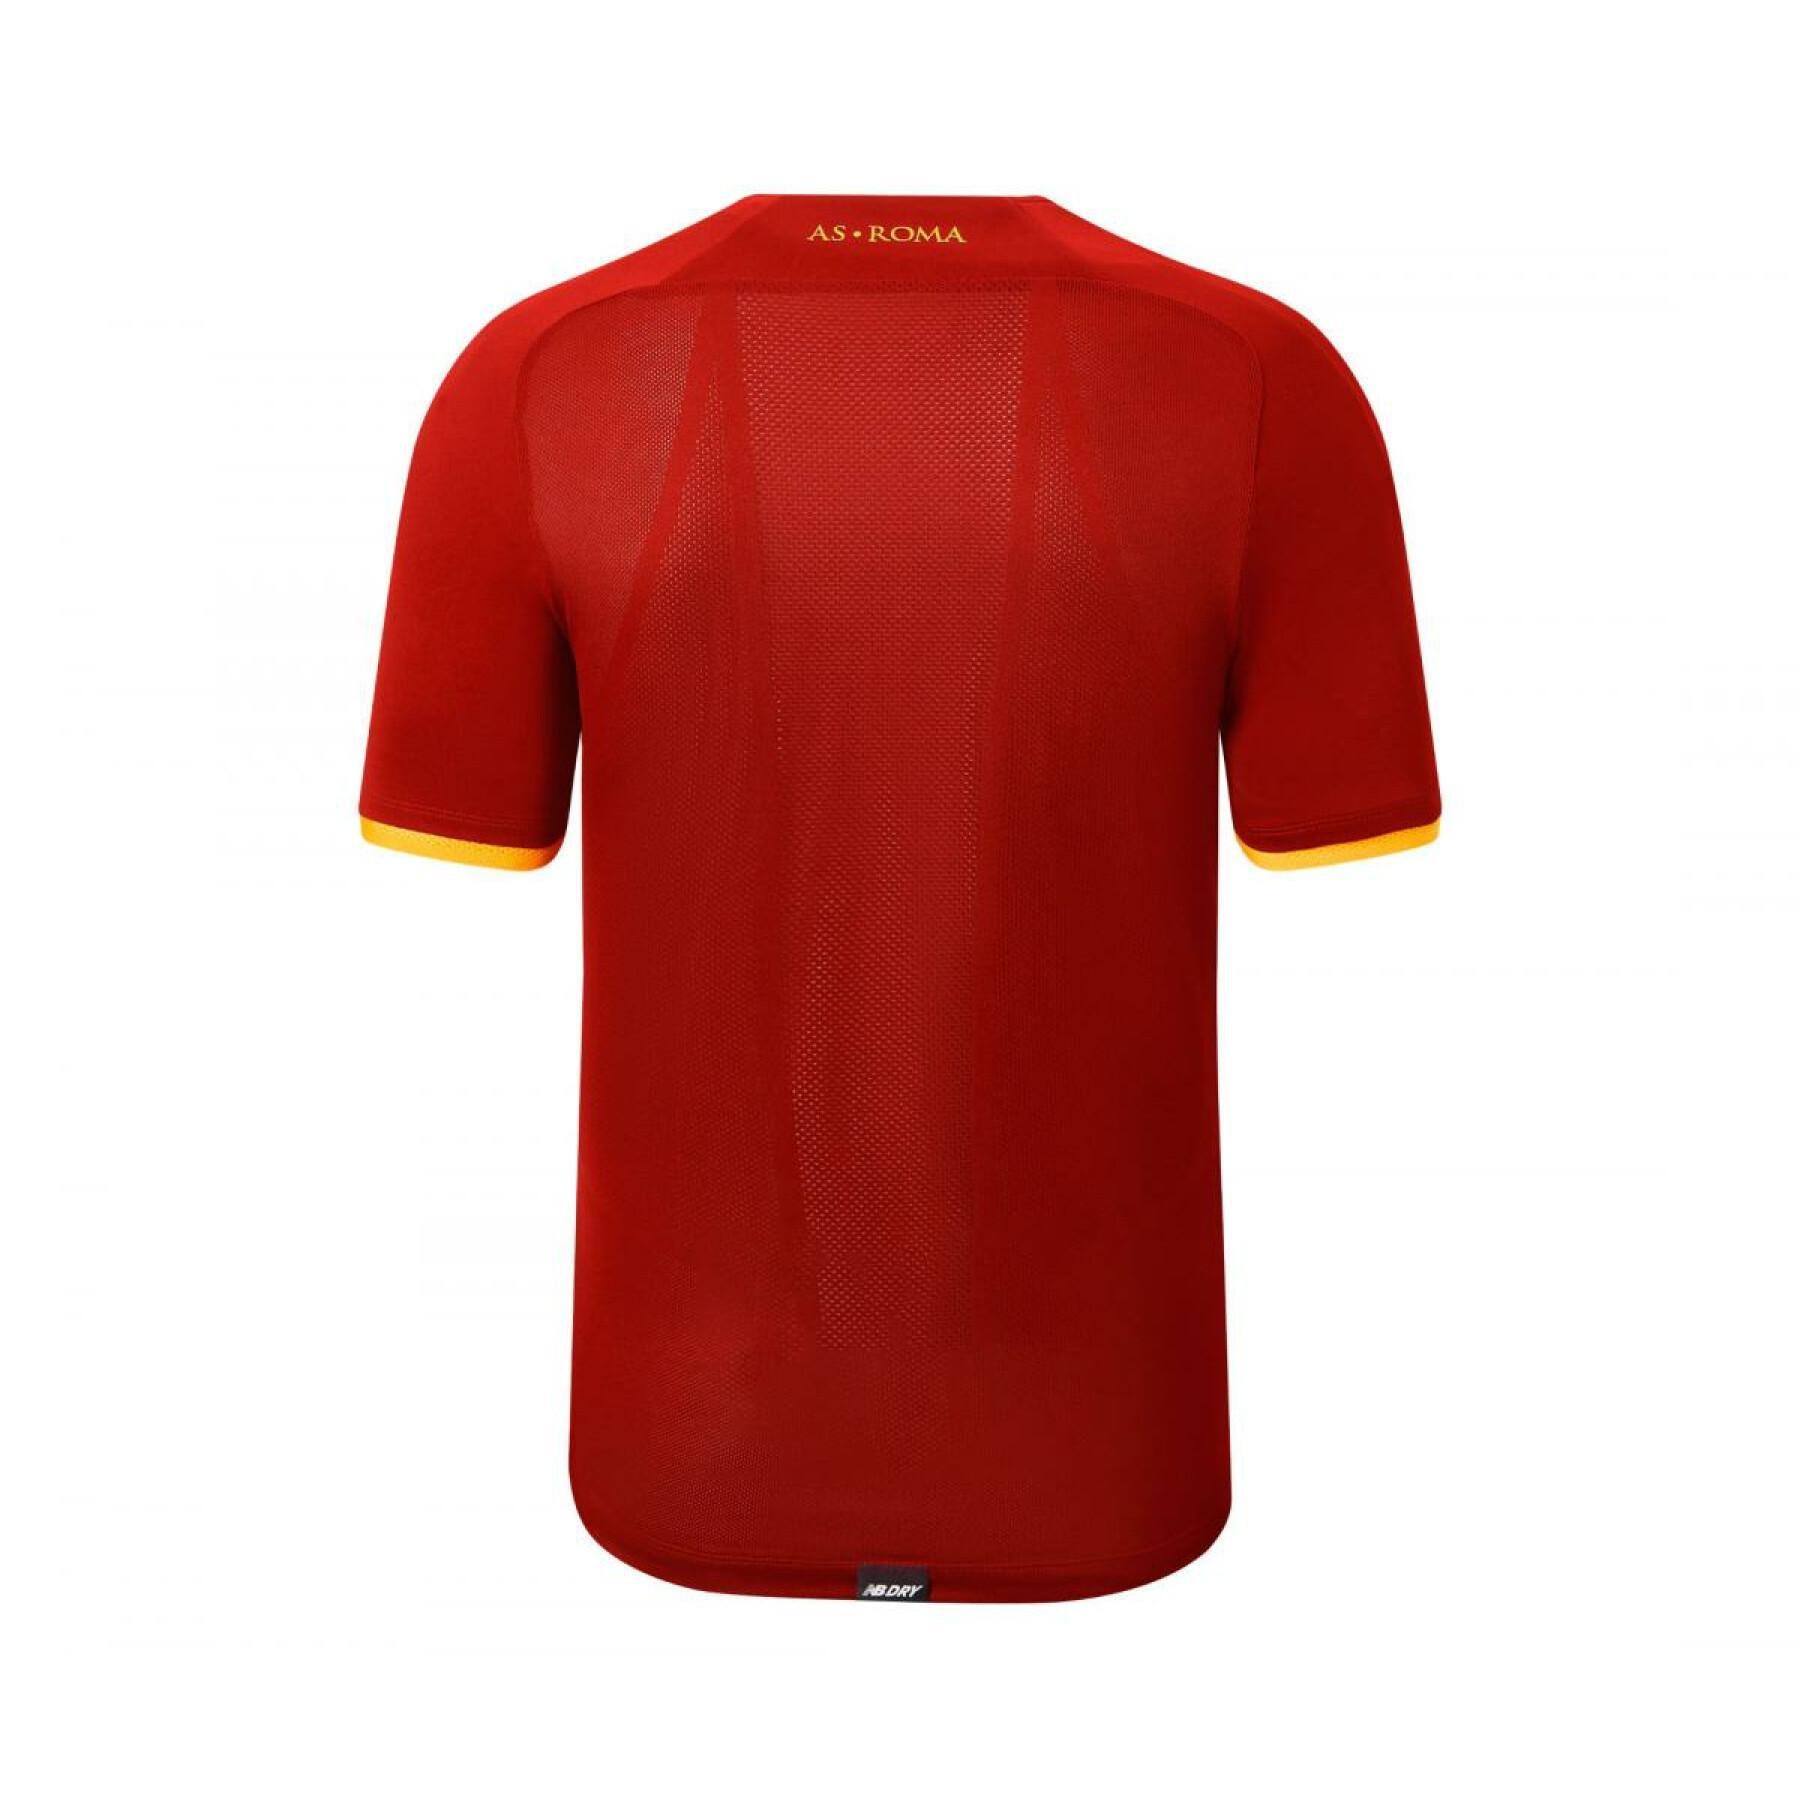 Home jersey AS Roma 2021/22 sans sponsor